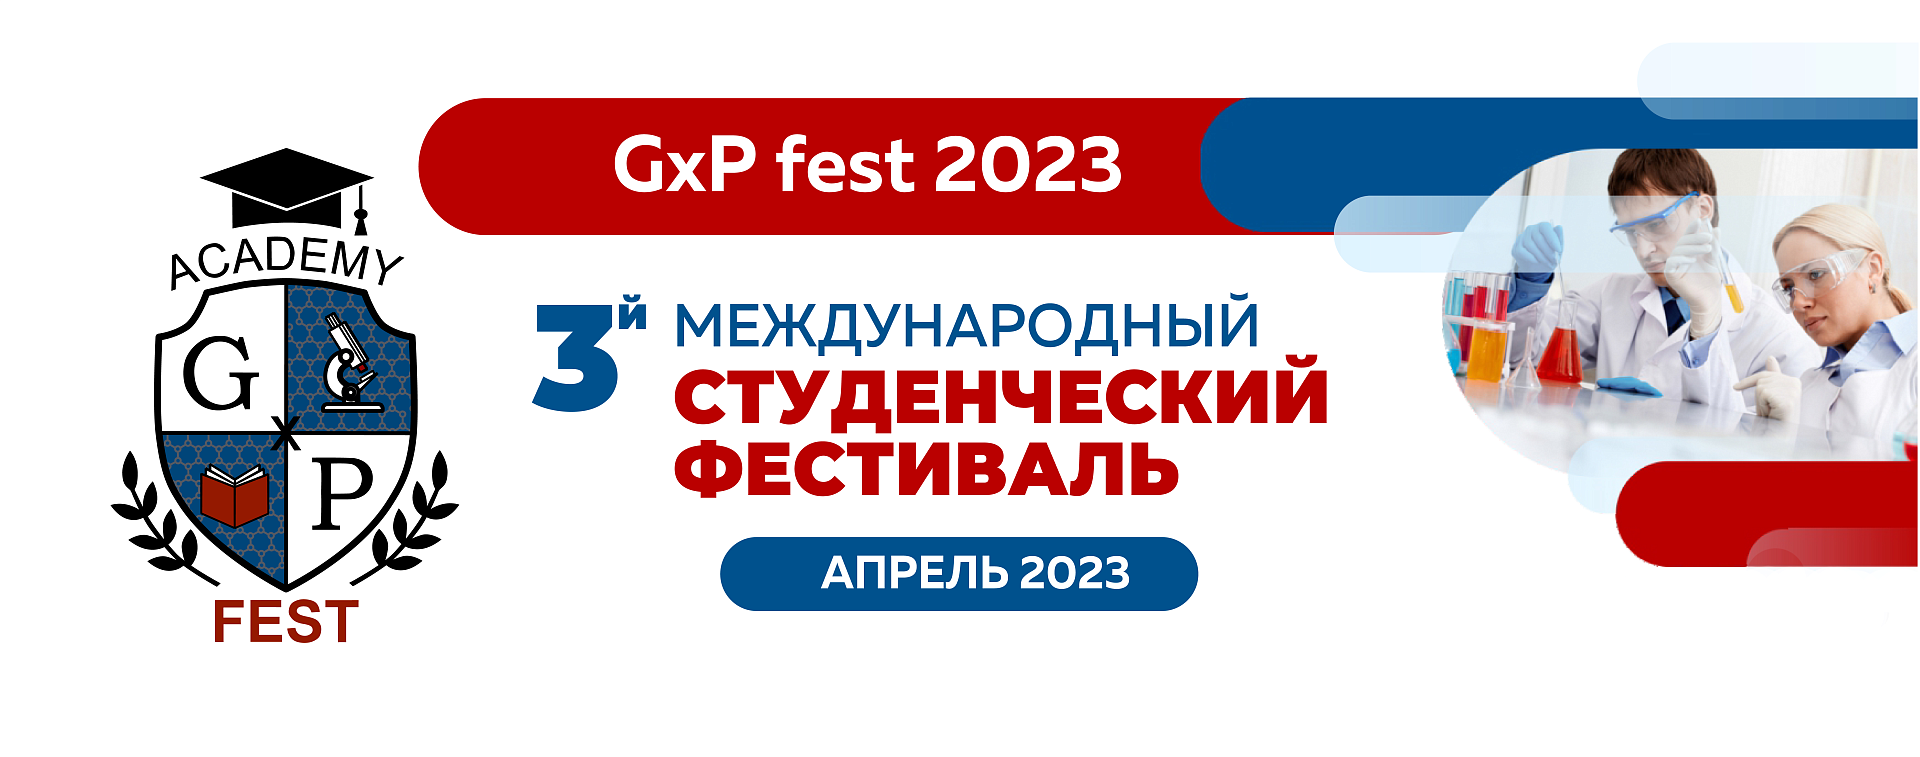 Итоги GxP-Феста 2023